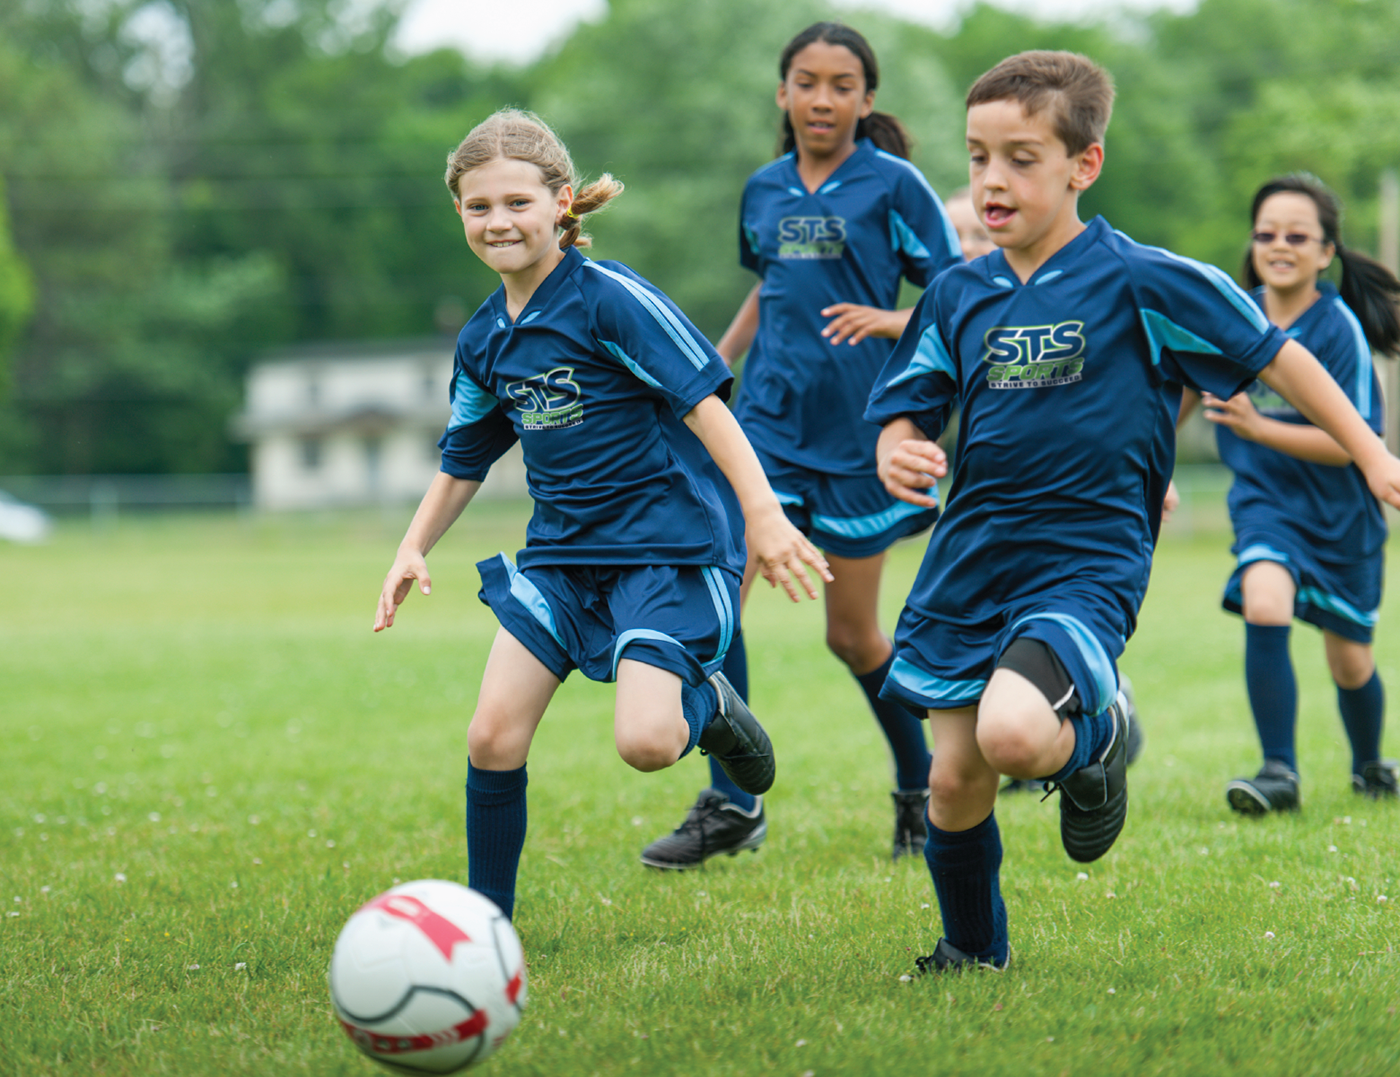 Футбол дети. Дети играющие в футбол. Дети футболисты. Спорт футбол дети. How to play sports